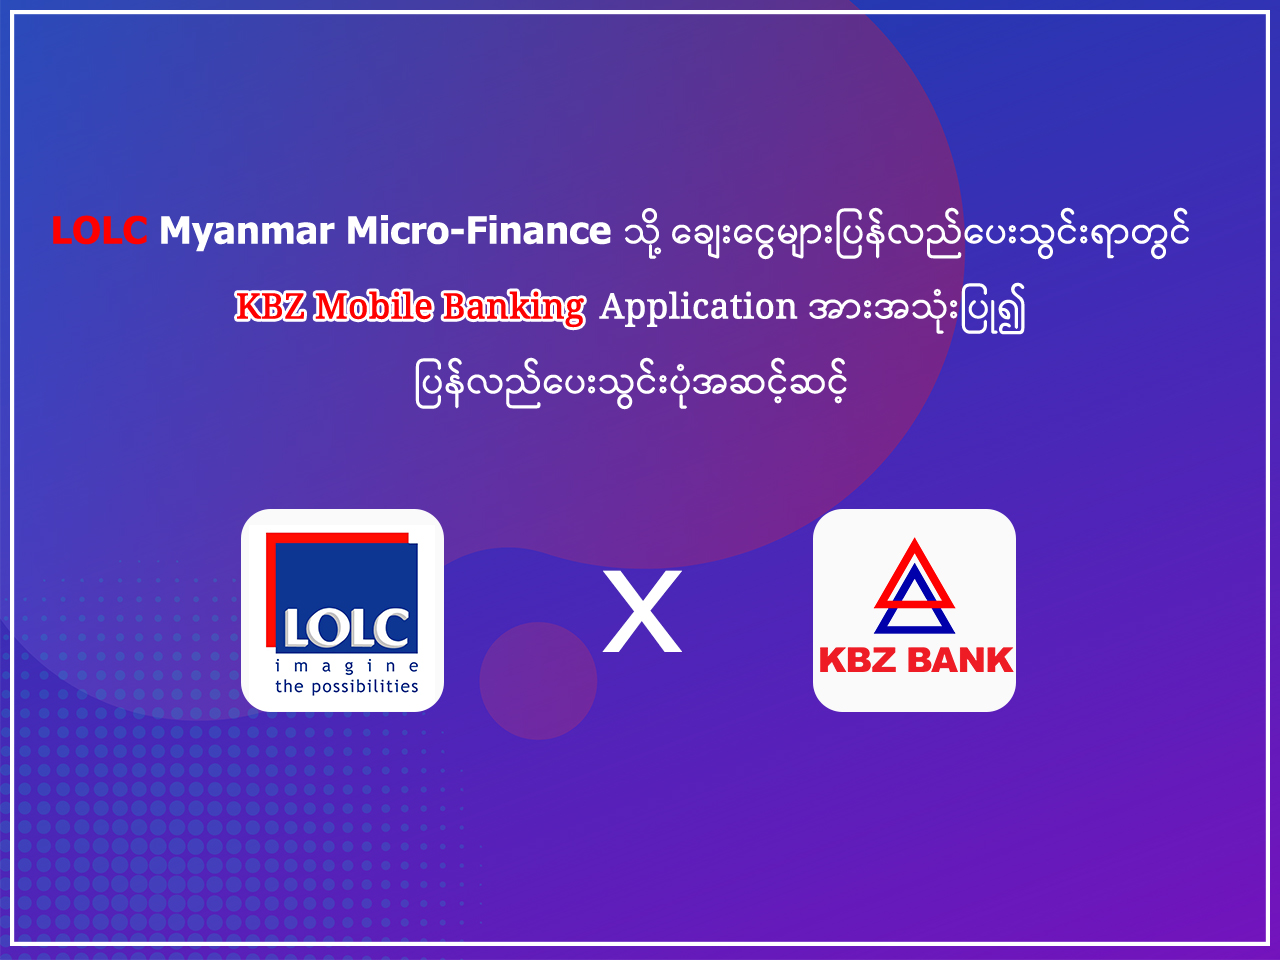 LOLC Myanmar